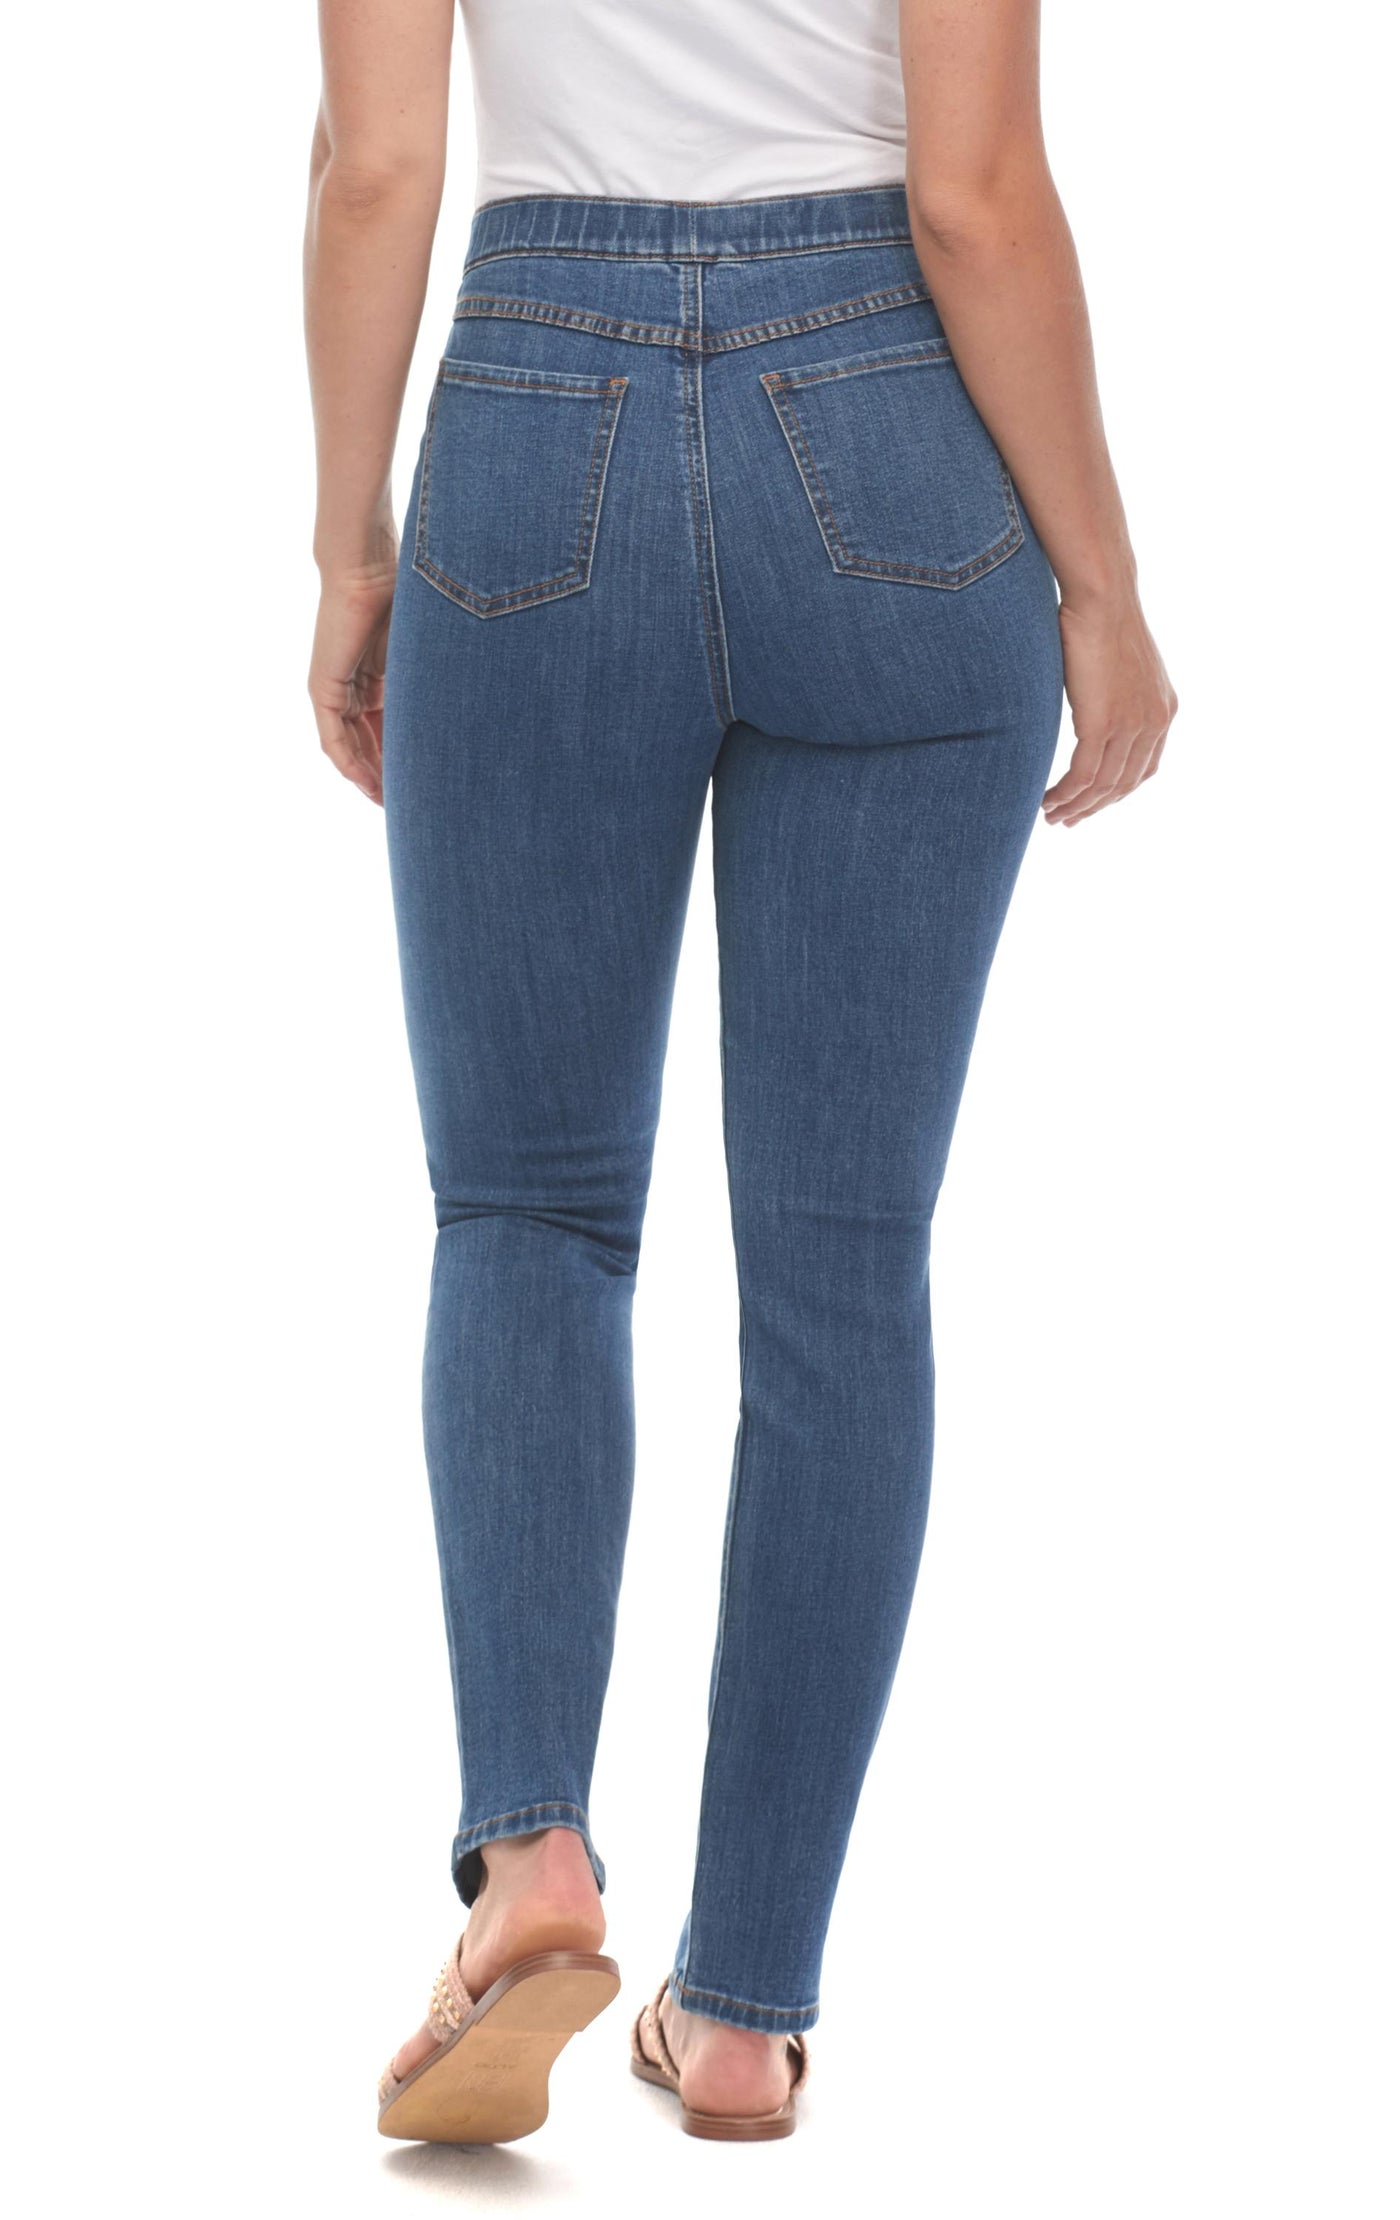 Pull On Cigarette Leg Style 2834322, Renew Denim, Mid Rise, Color Indigo French Dressing Jeans